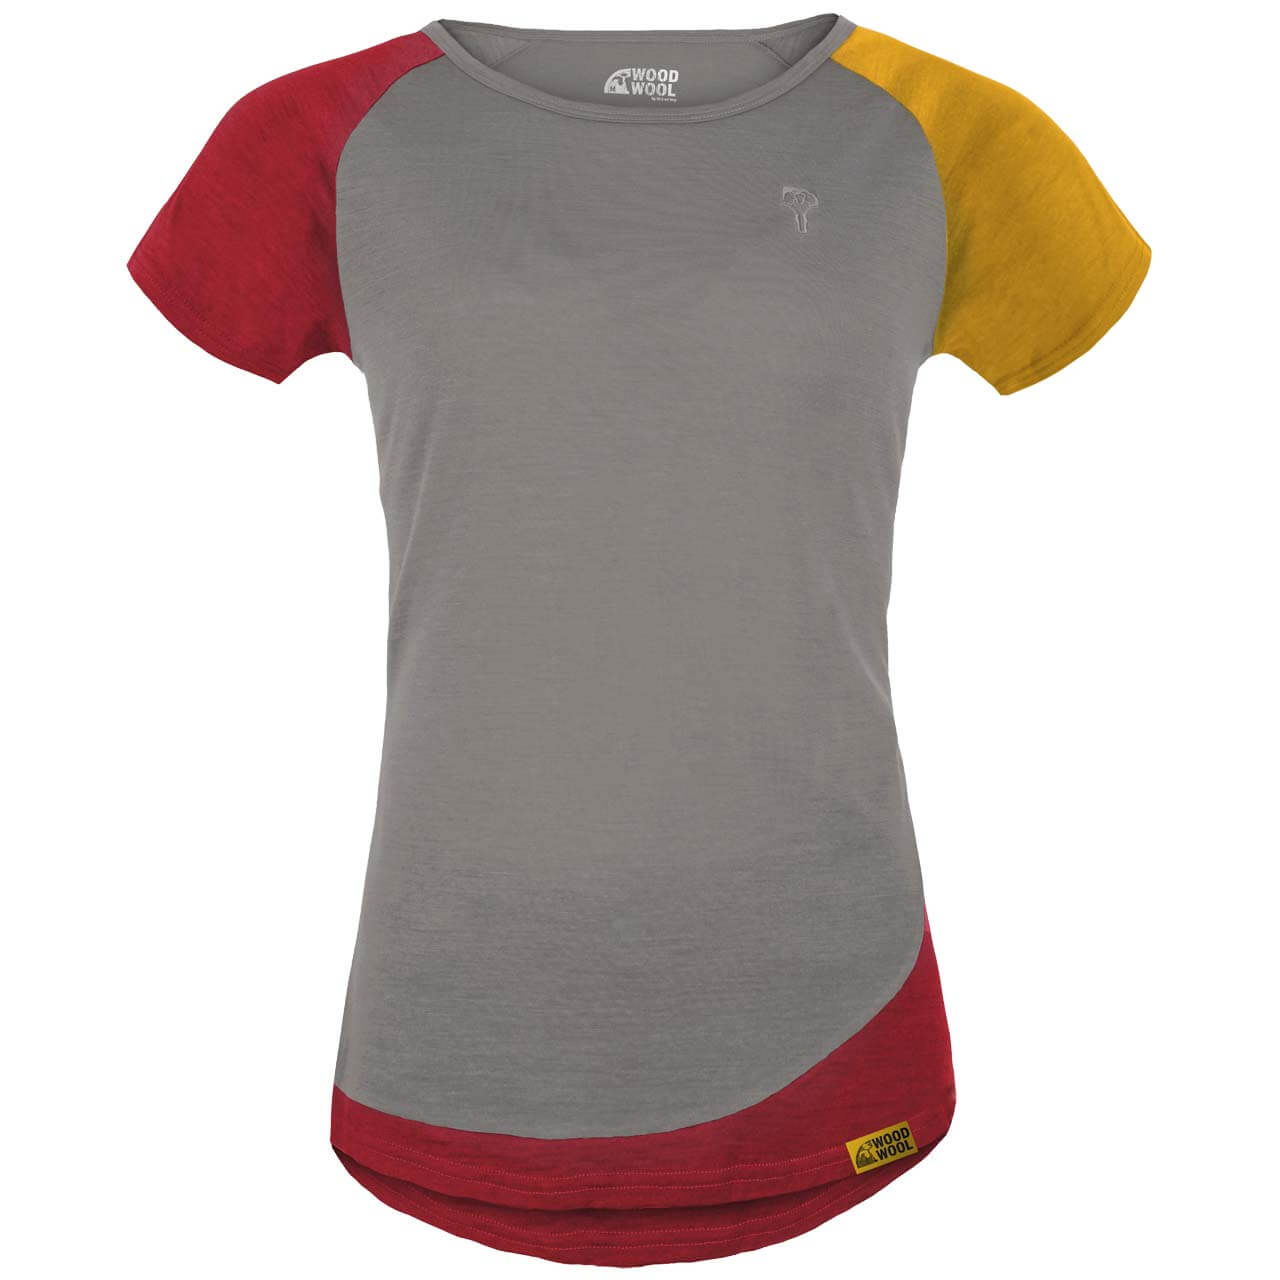 Grüezi Bag WoodWool Janeway T-Shirt - Slate Grey, M von Grüezi Bag